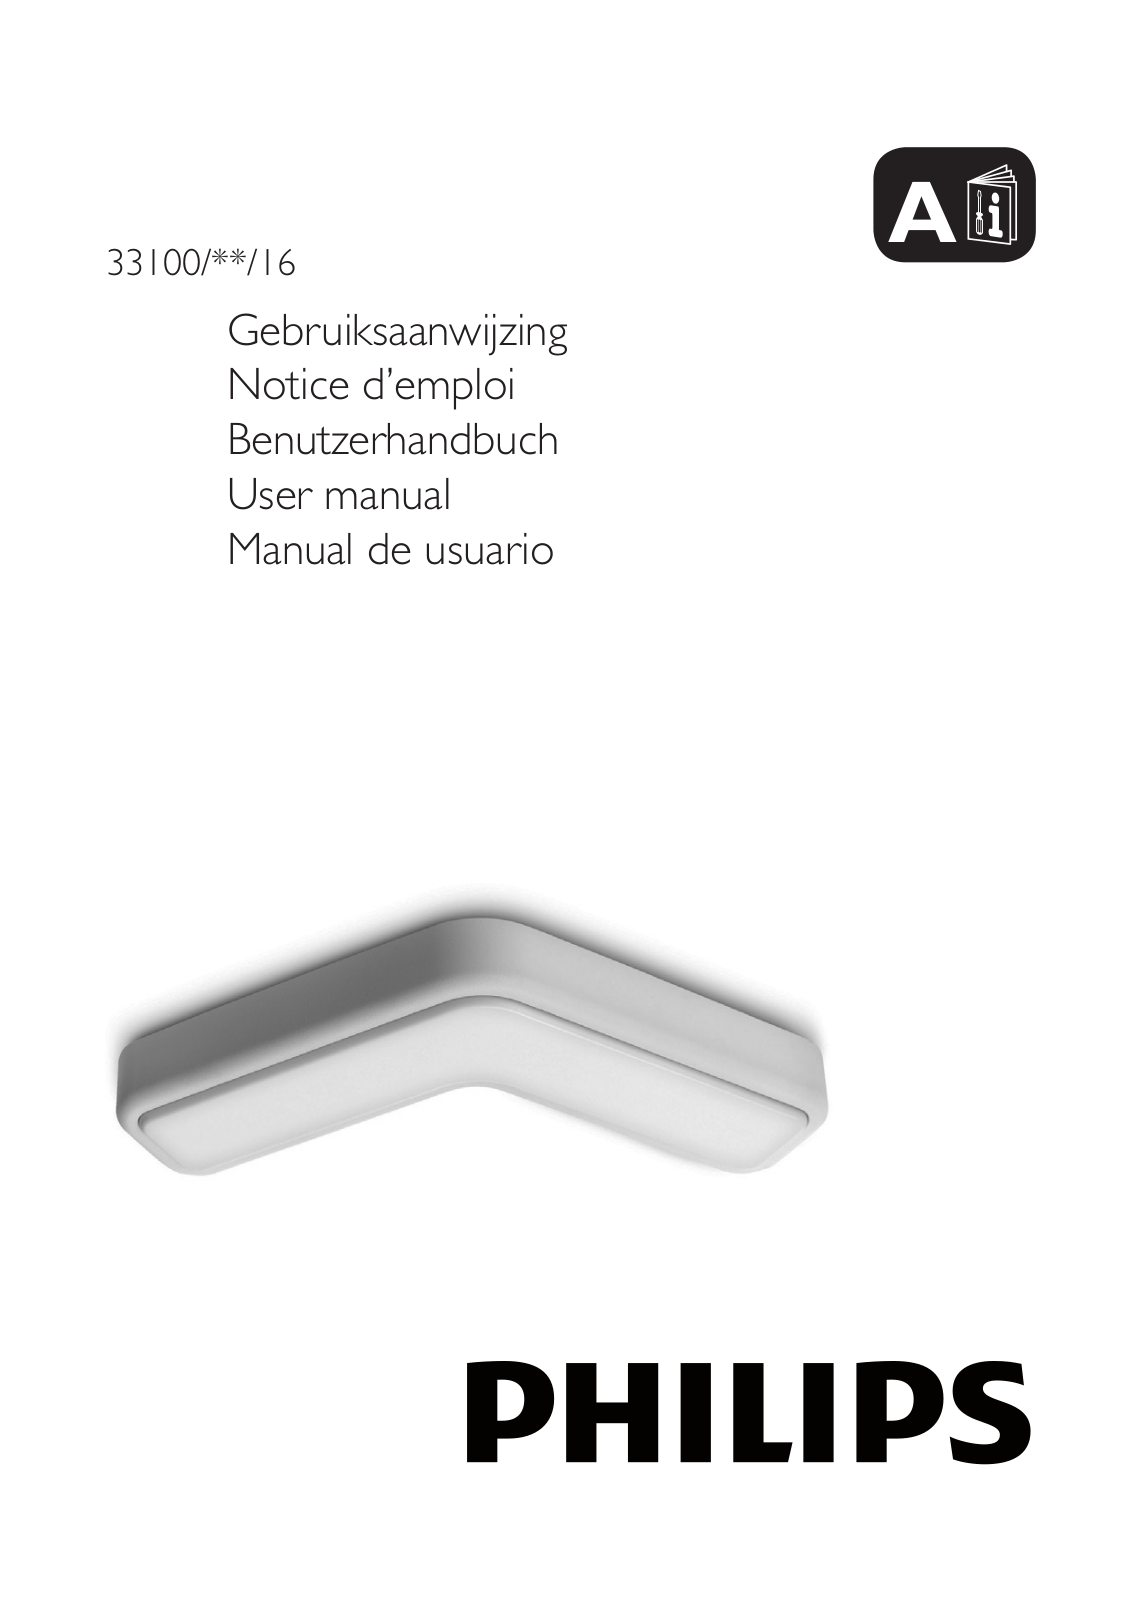 Philips 33100-31-16 User Manual